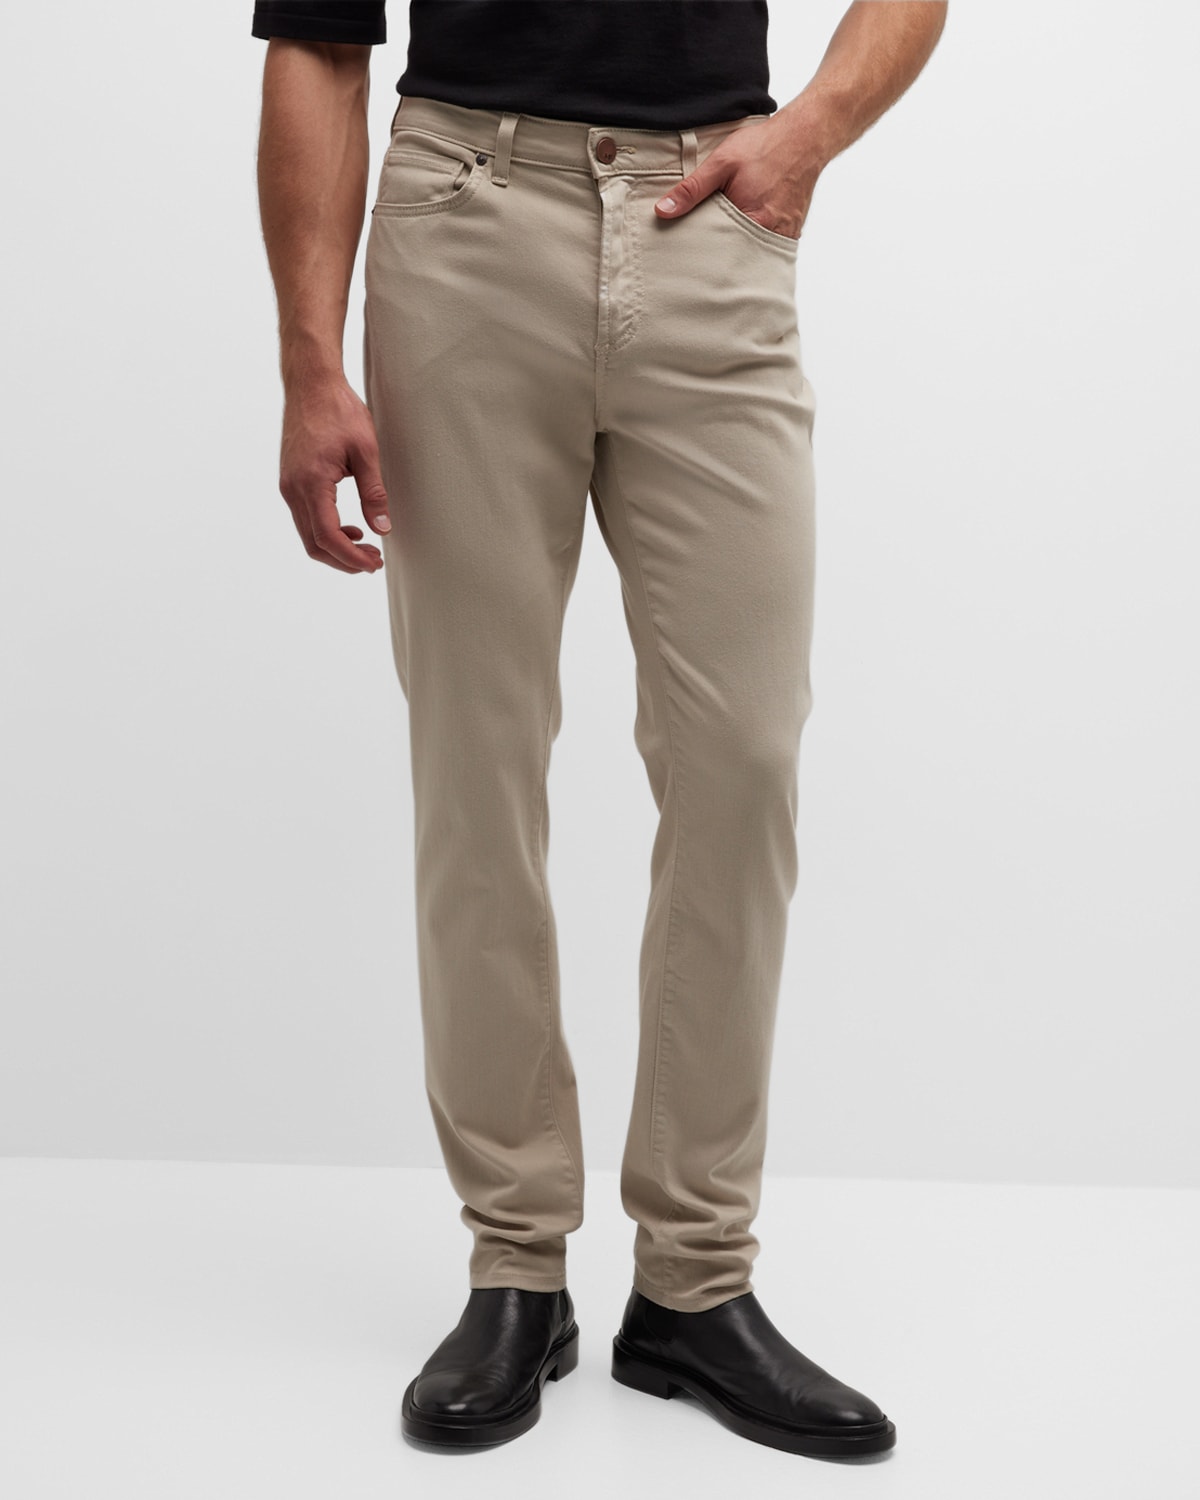 Men's Parisian Luxe Brando Khaki Pants